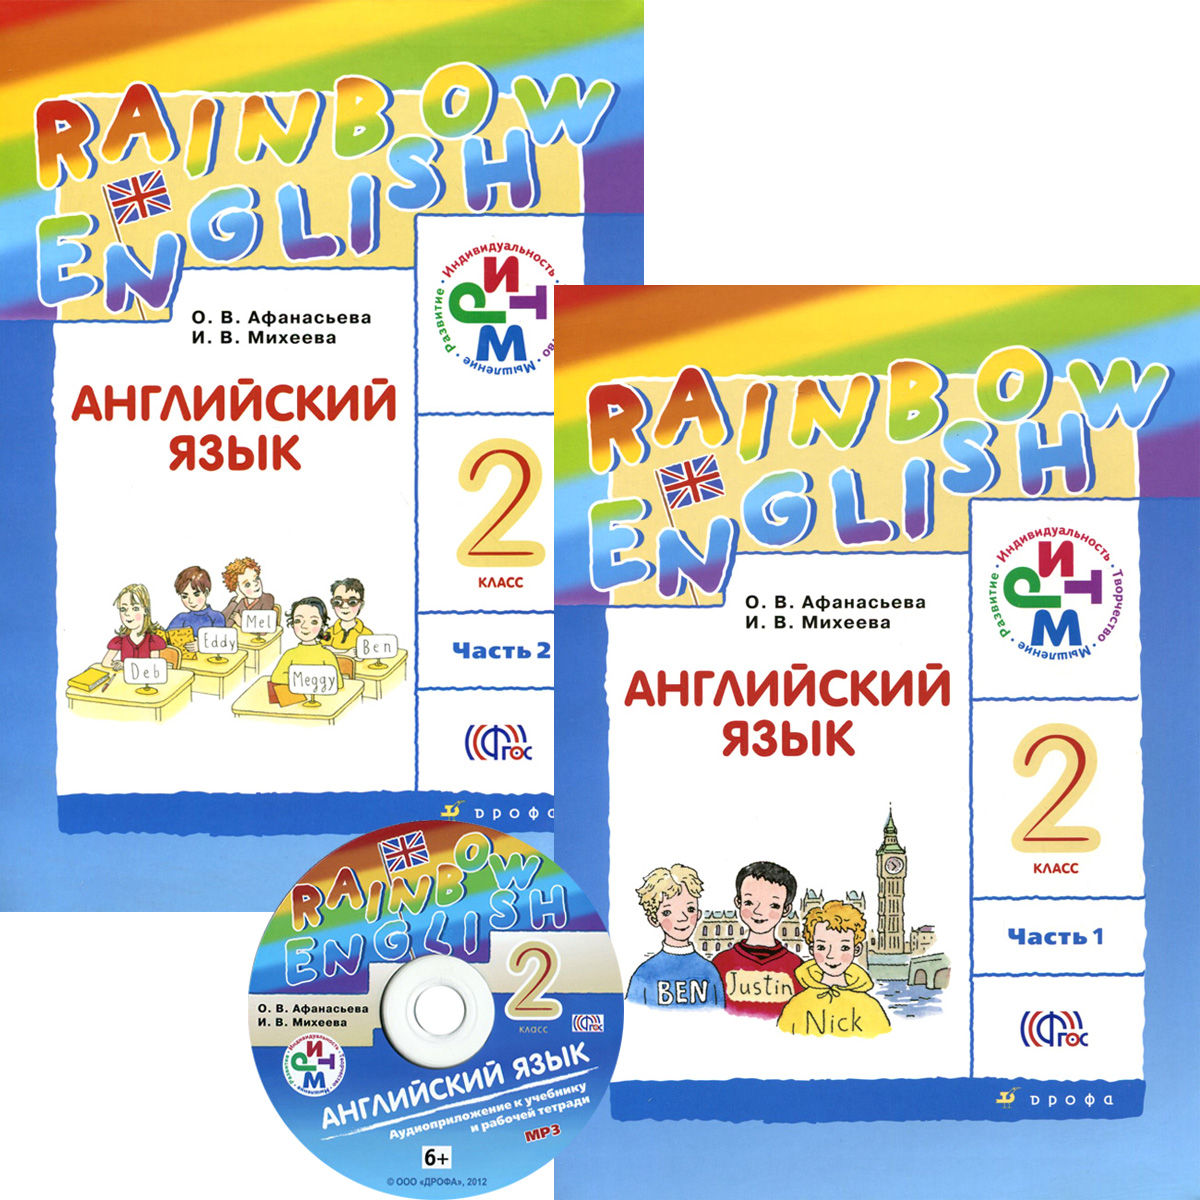 Rainbow второй класс учебник вторая часть. 2 Класс английский язык Rainbow English Афанасьева Михеева. УМК Афанасьева Михеева Rainbow English. Английский язык 2 класс учебник. УМК Rainbow English 2 класс.